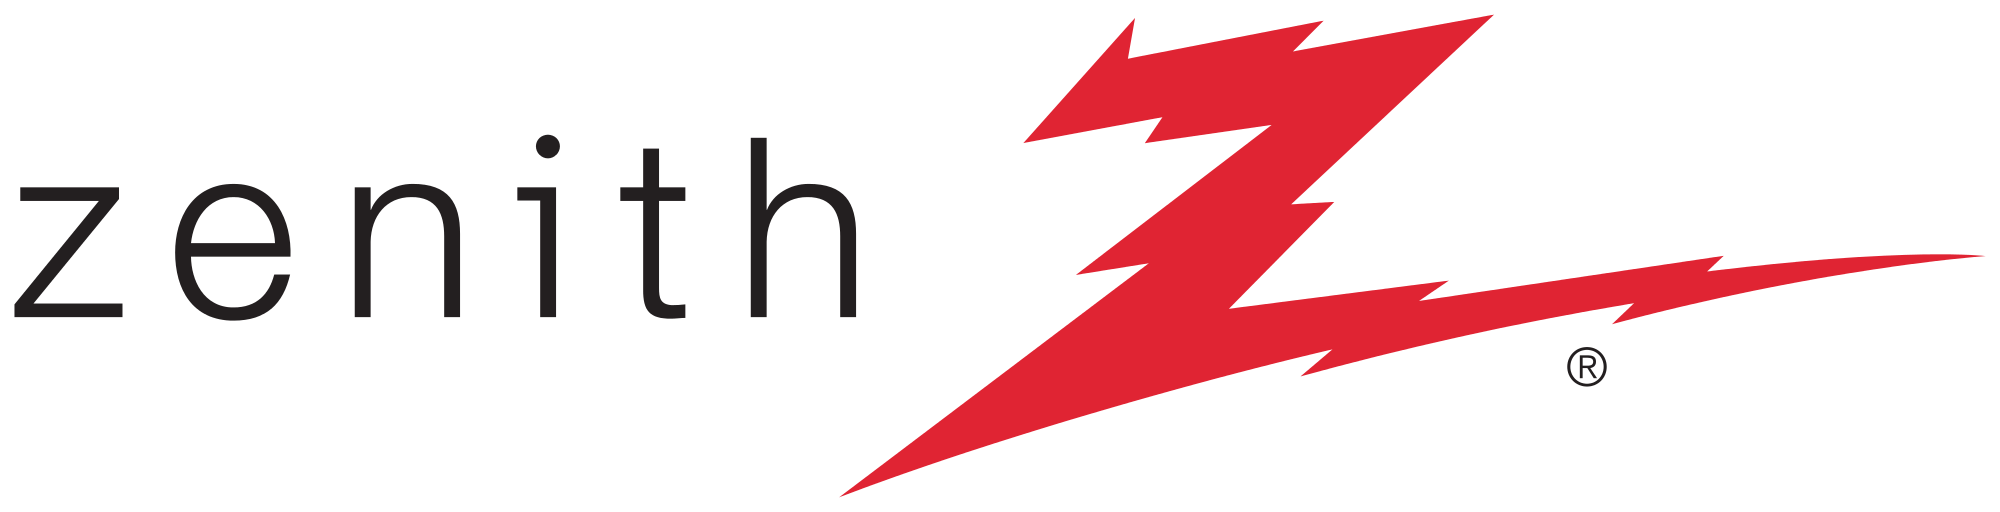 Zenith Logo - Zenith Electronics Corporation logo.svg